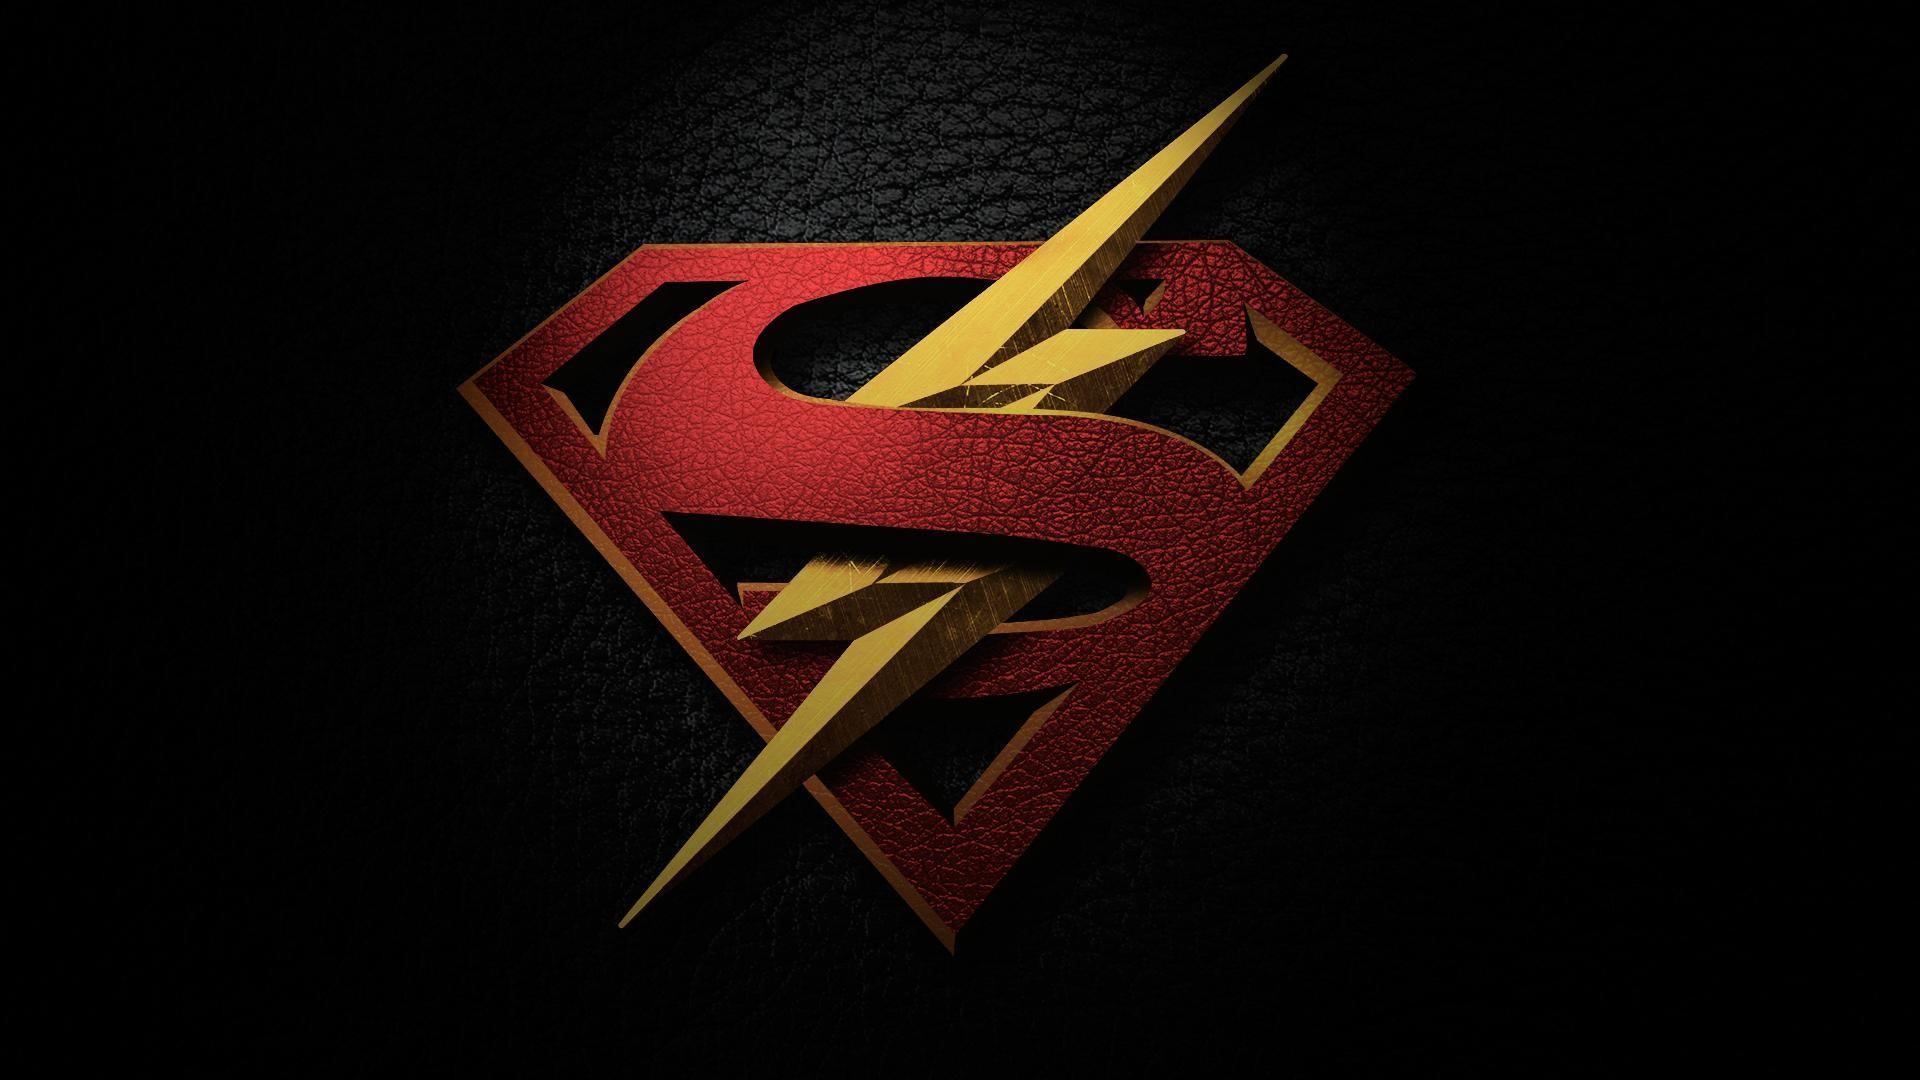 superwoman logo wallpaper